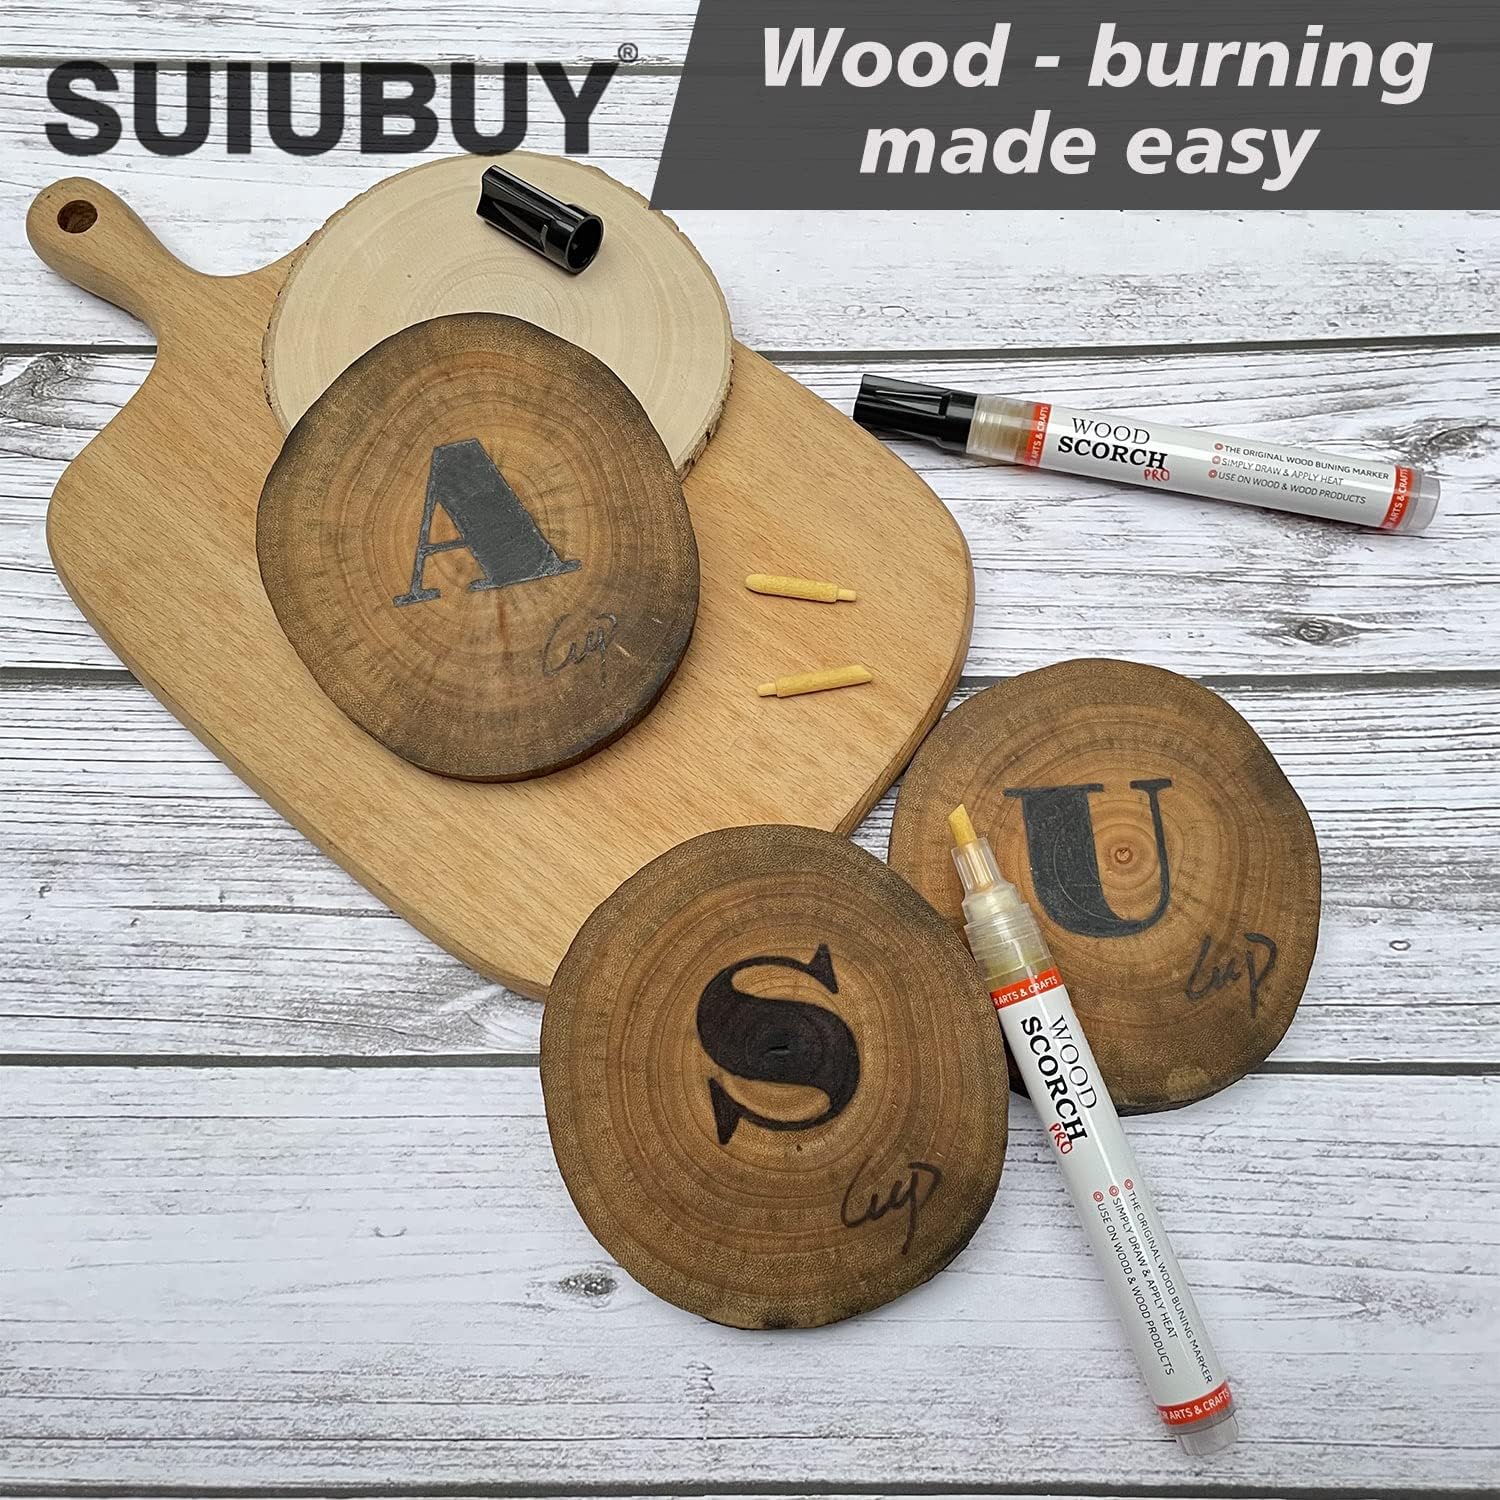 SUIUBUY Wood Burning Pen Tool Review